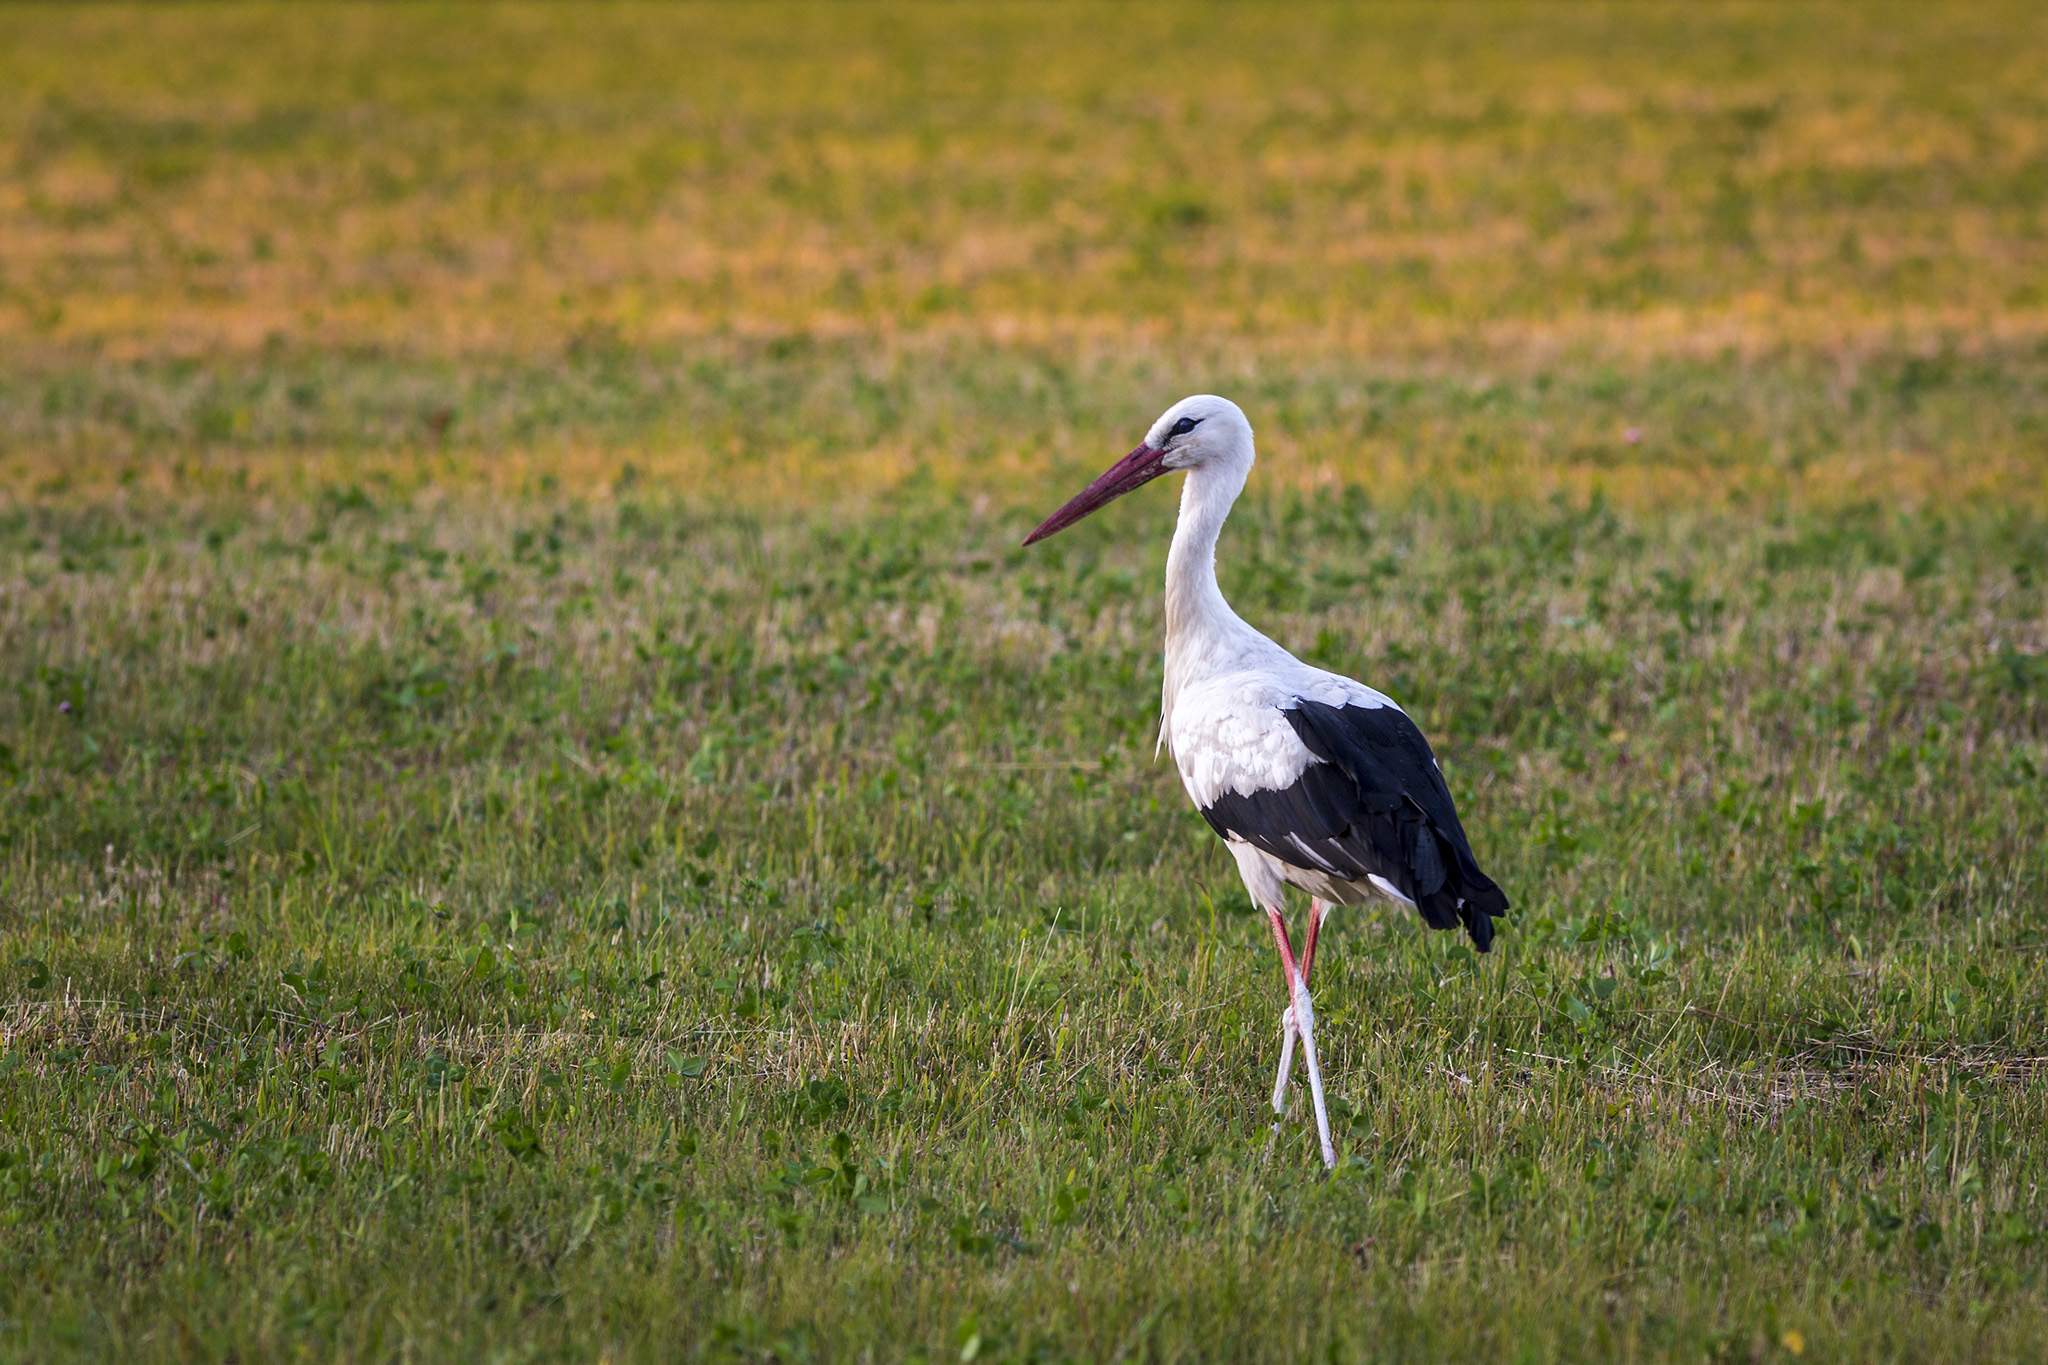 Valge toonekurg, White stork (Ciconia ciconia)